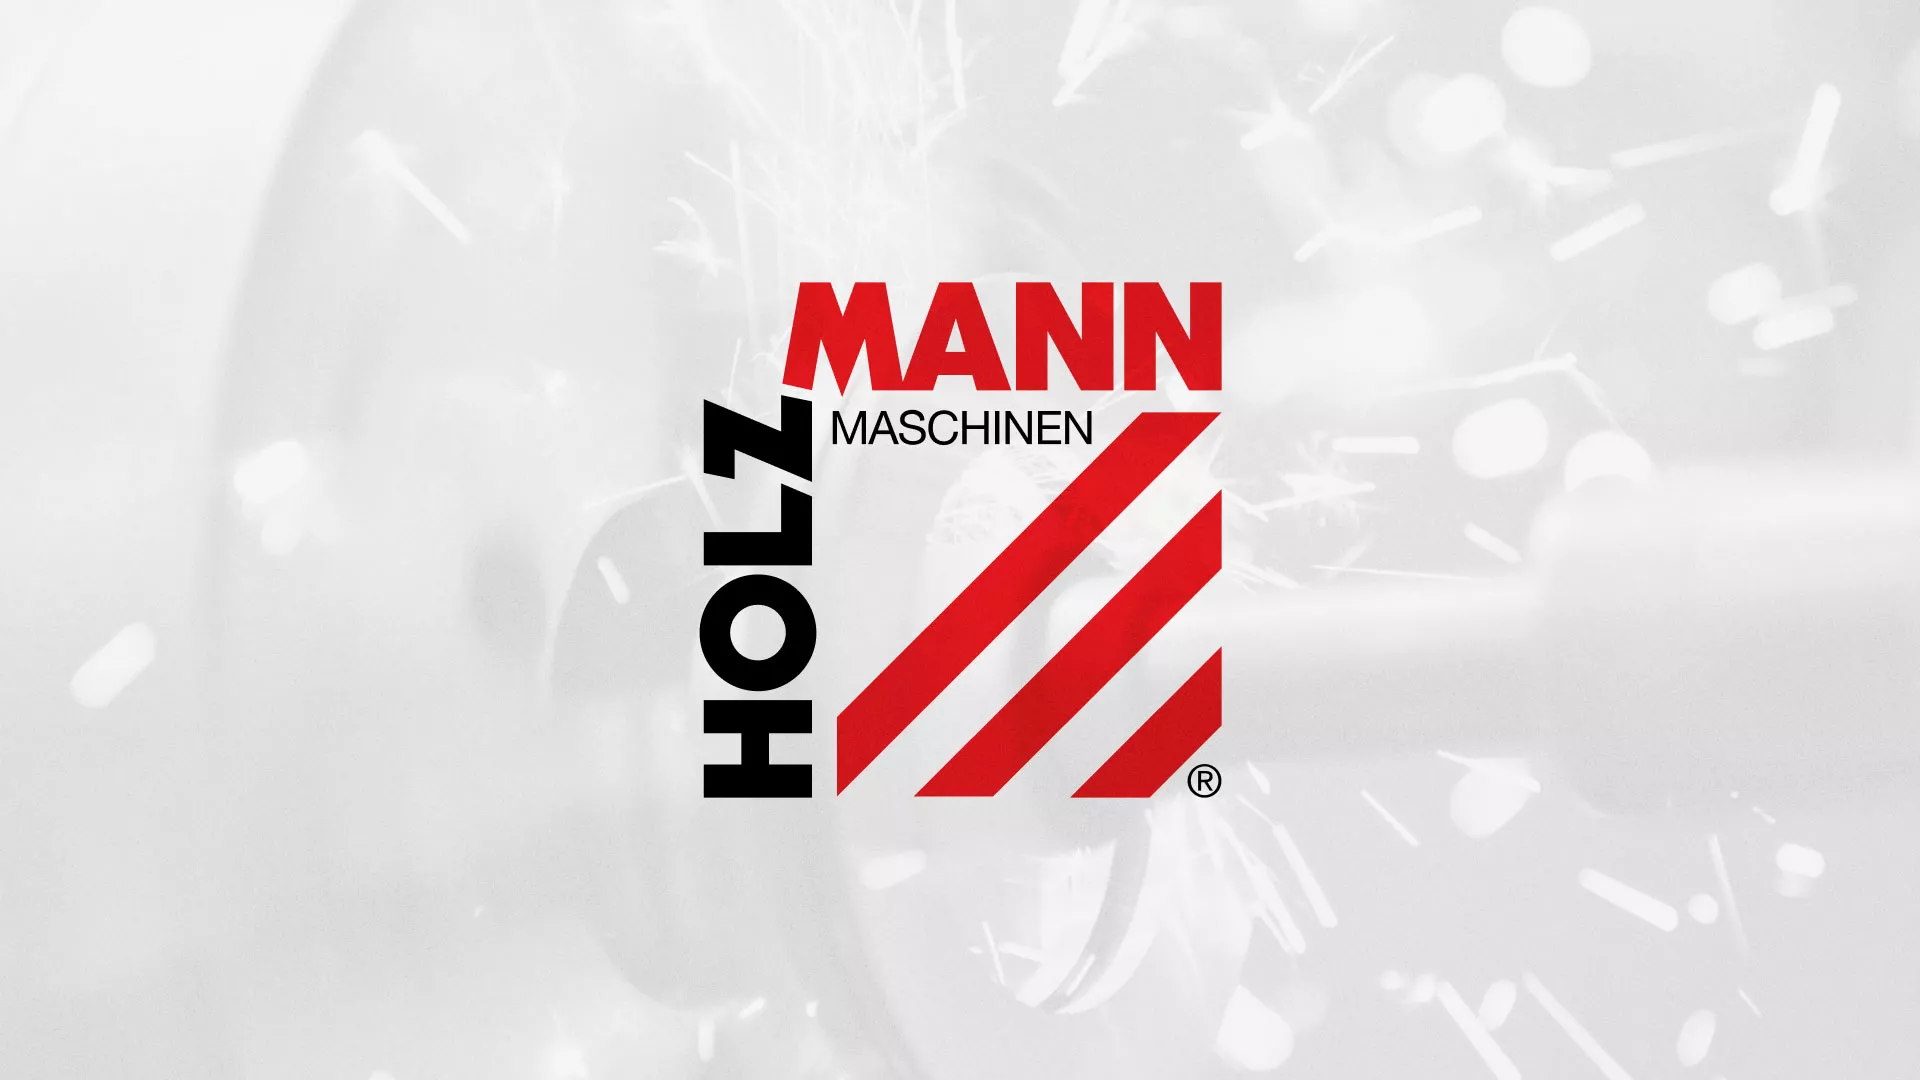 Создание сайта компании «HOLZMANN Maschinen GmbH» в Томмоте